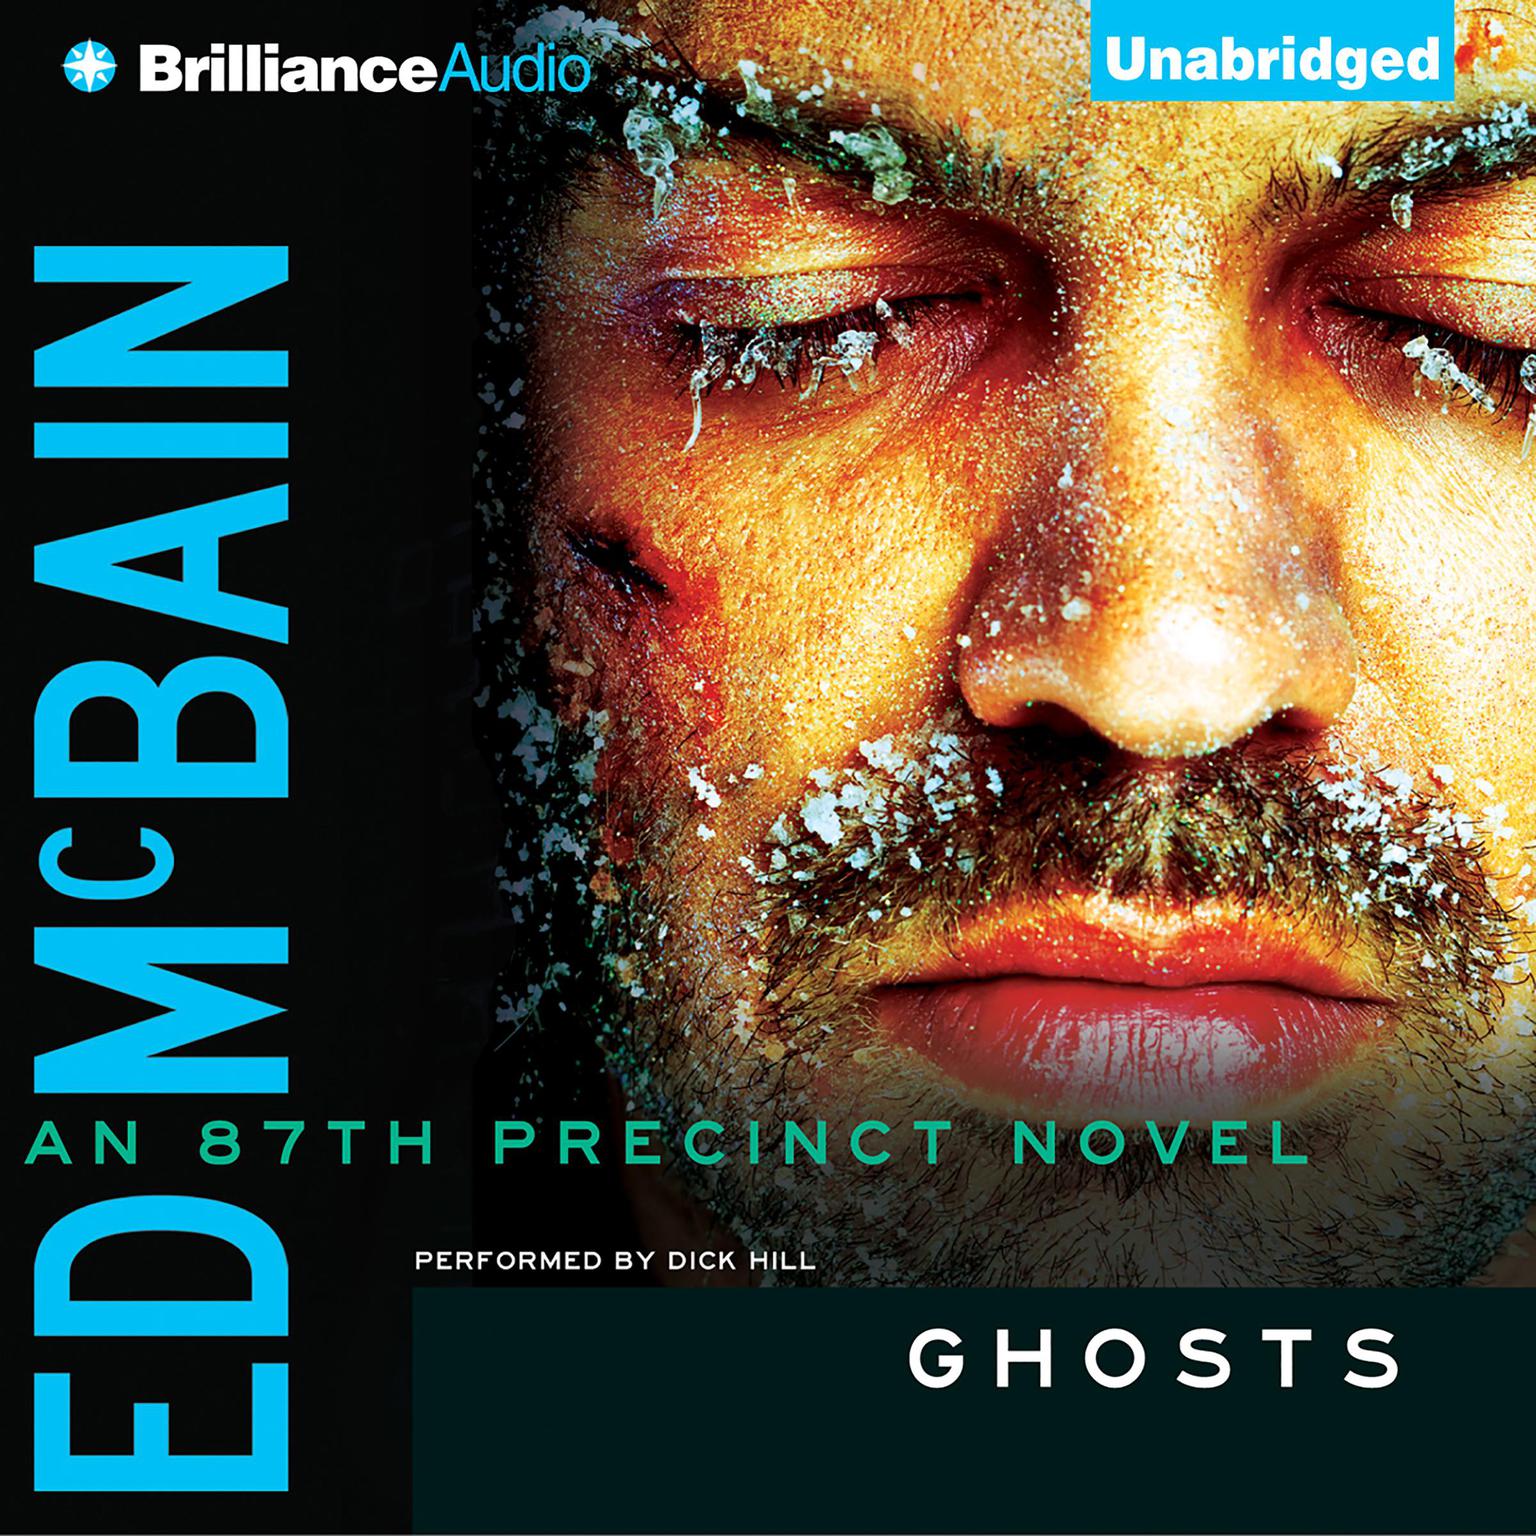 Ghosts Audiobook, by Ed McBain